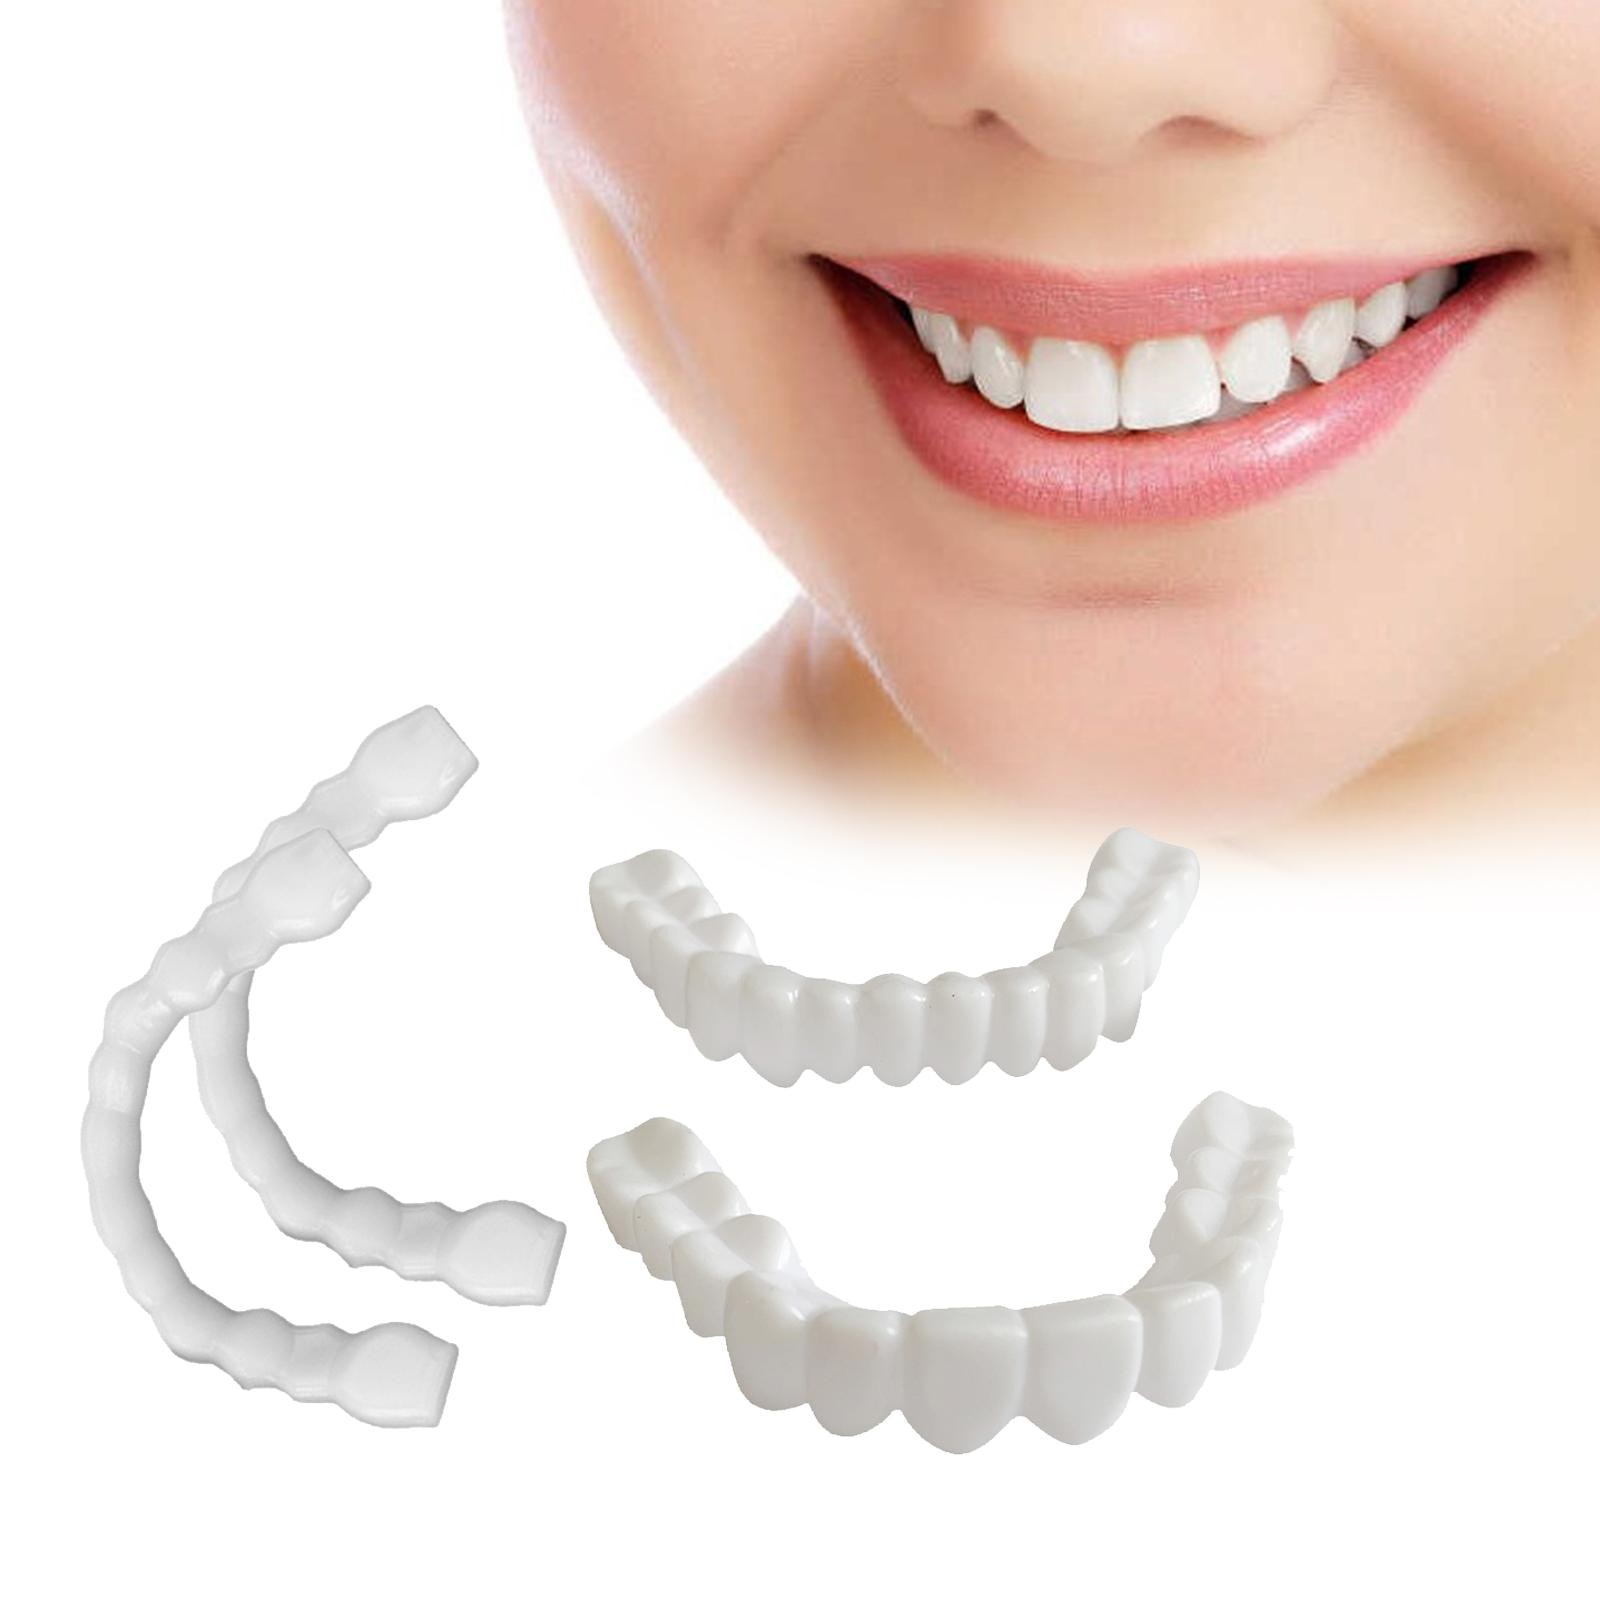 Resin Teeth  Fake Teeth Simulation Braces Smiling Veneers Dentures Cosmetic Fake Tooth Cover Perfect Smiling White